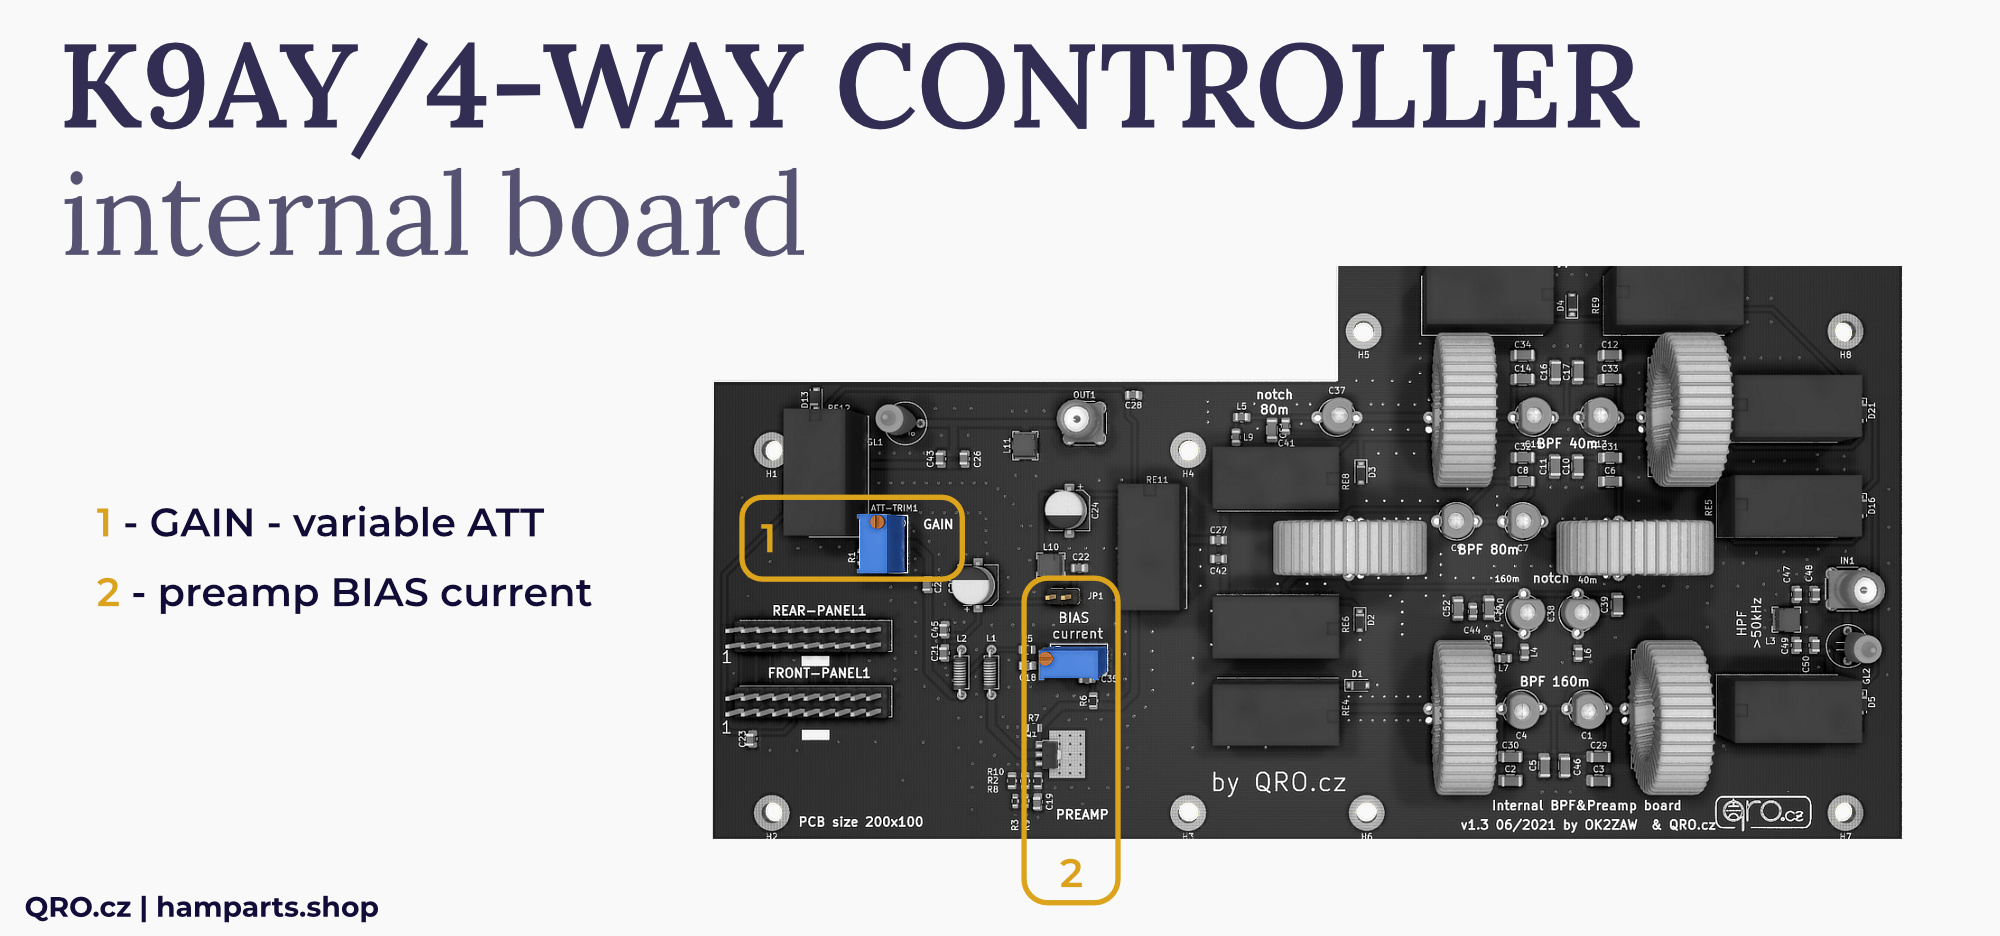 k9ay/4-way controller internal bps and preamp board qro.cz hamparts.shop